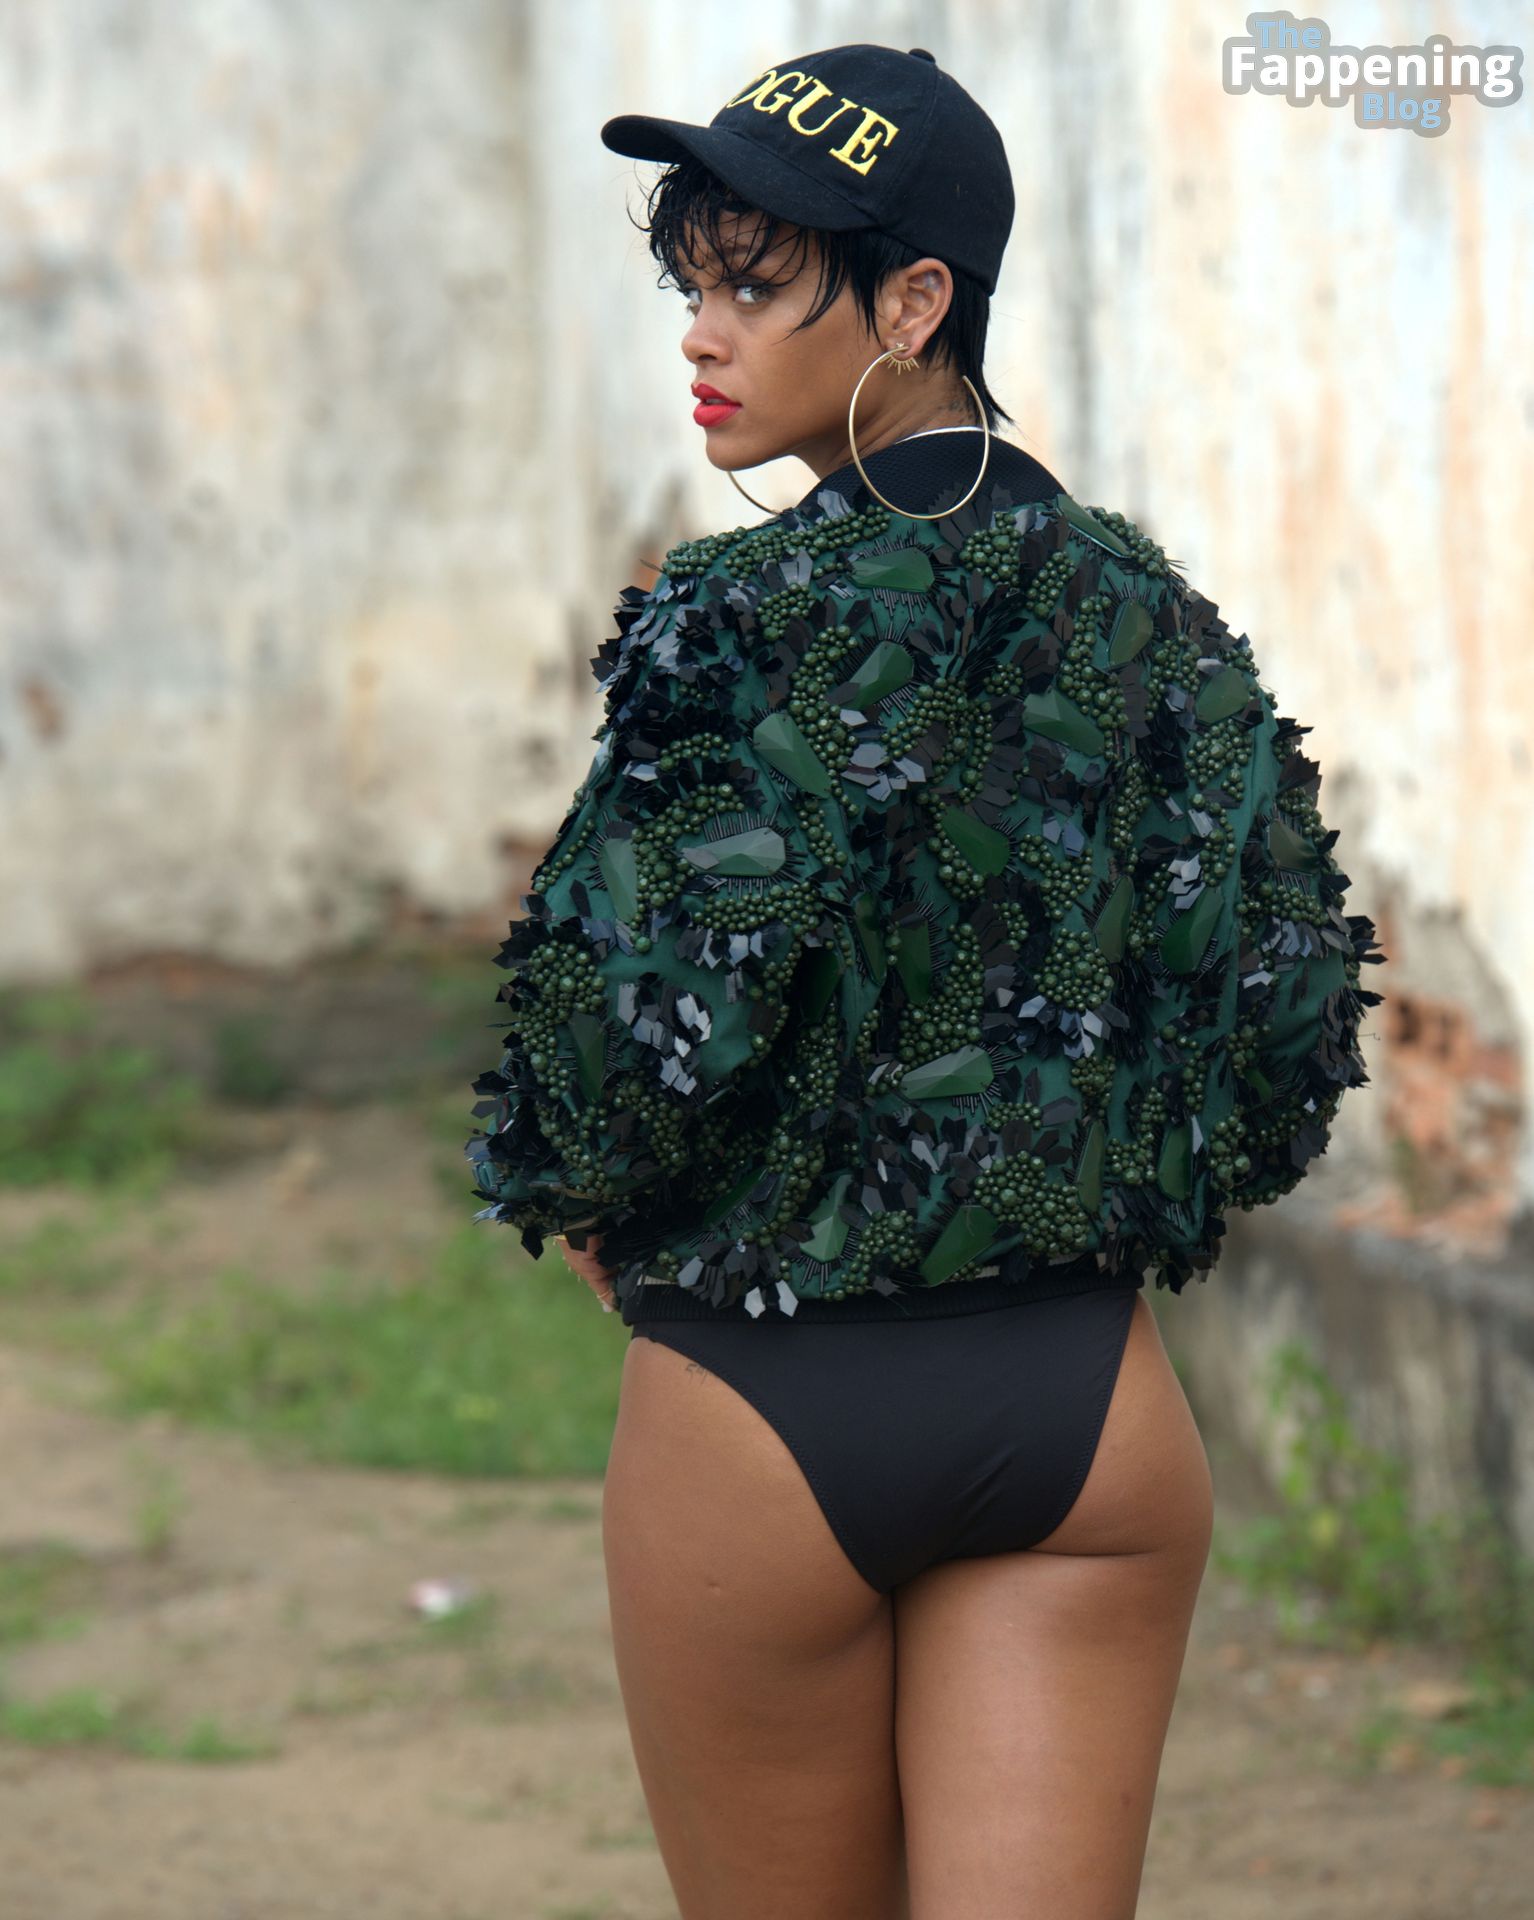 Rihanna-Nude-Sexy-34-The-Fappening-Blog.jpg